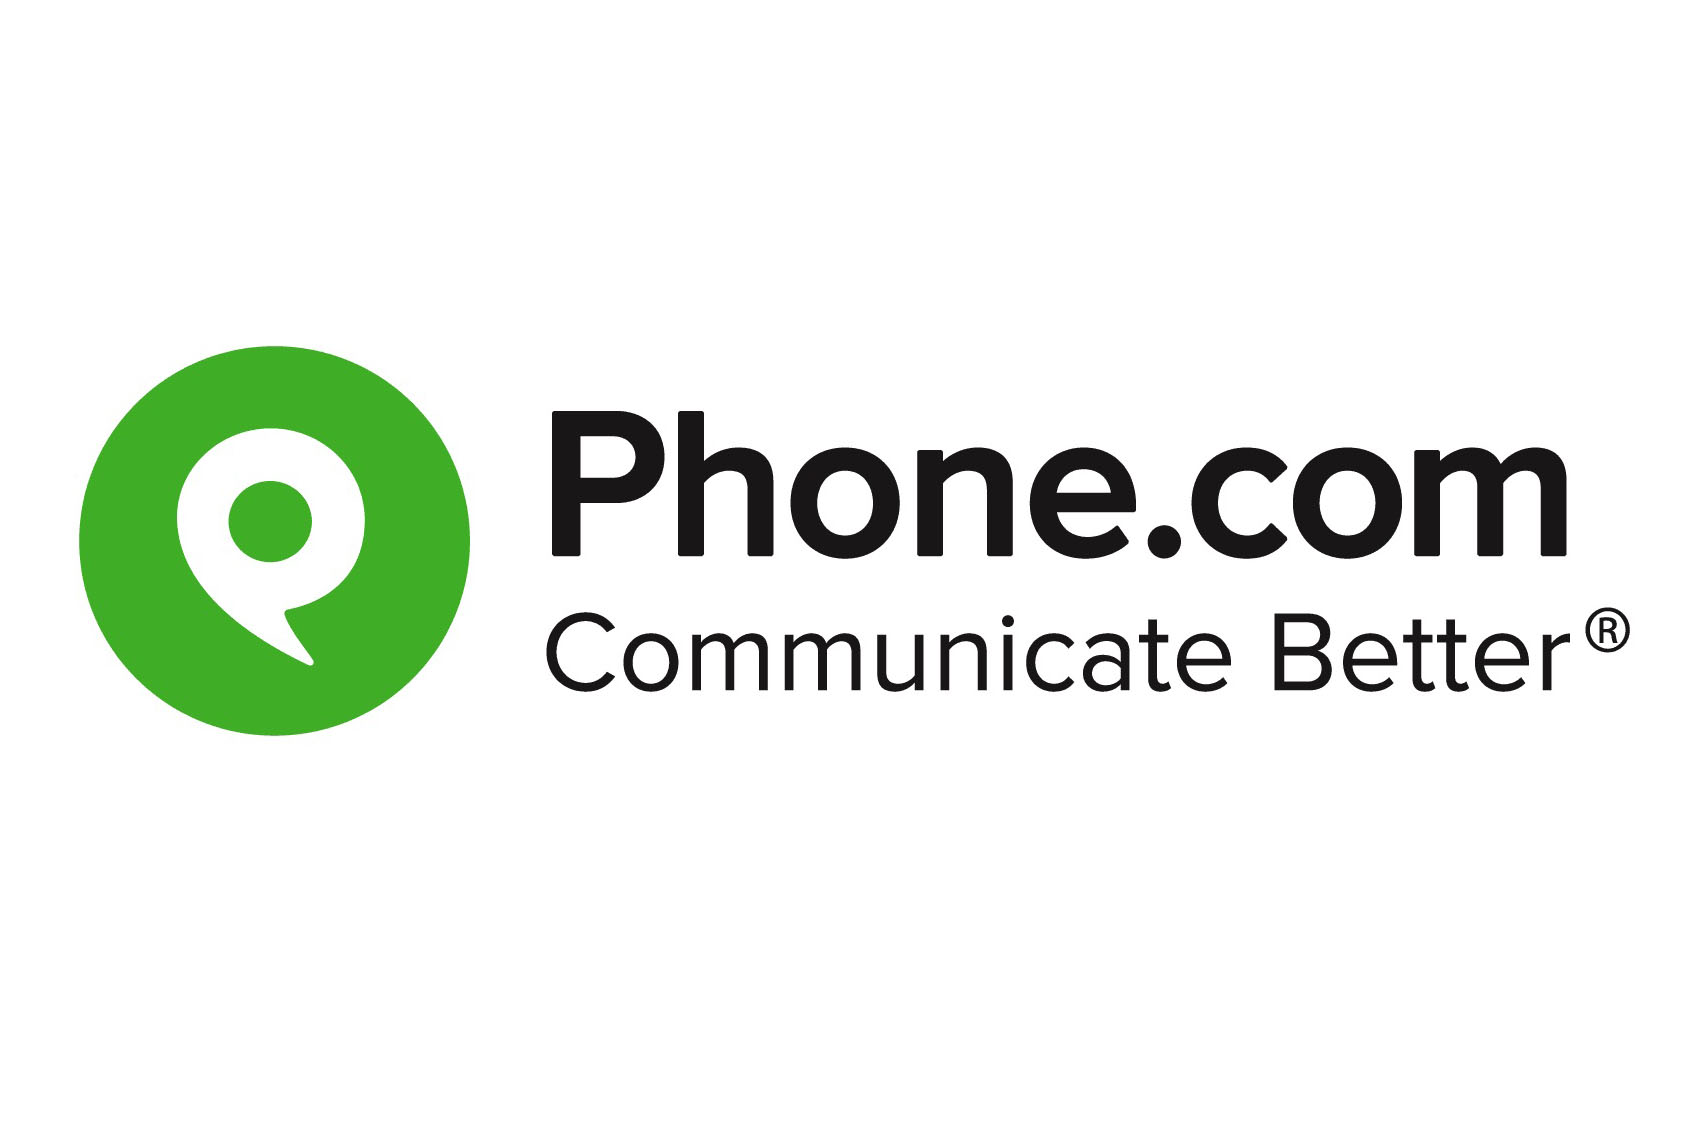 Phone.com in partnership with CreativeTechs | CreativeTechs.com